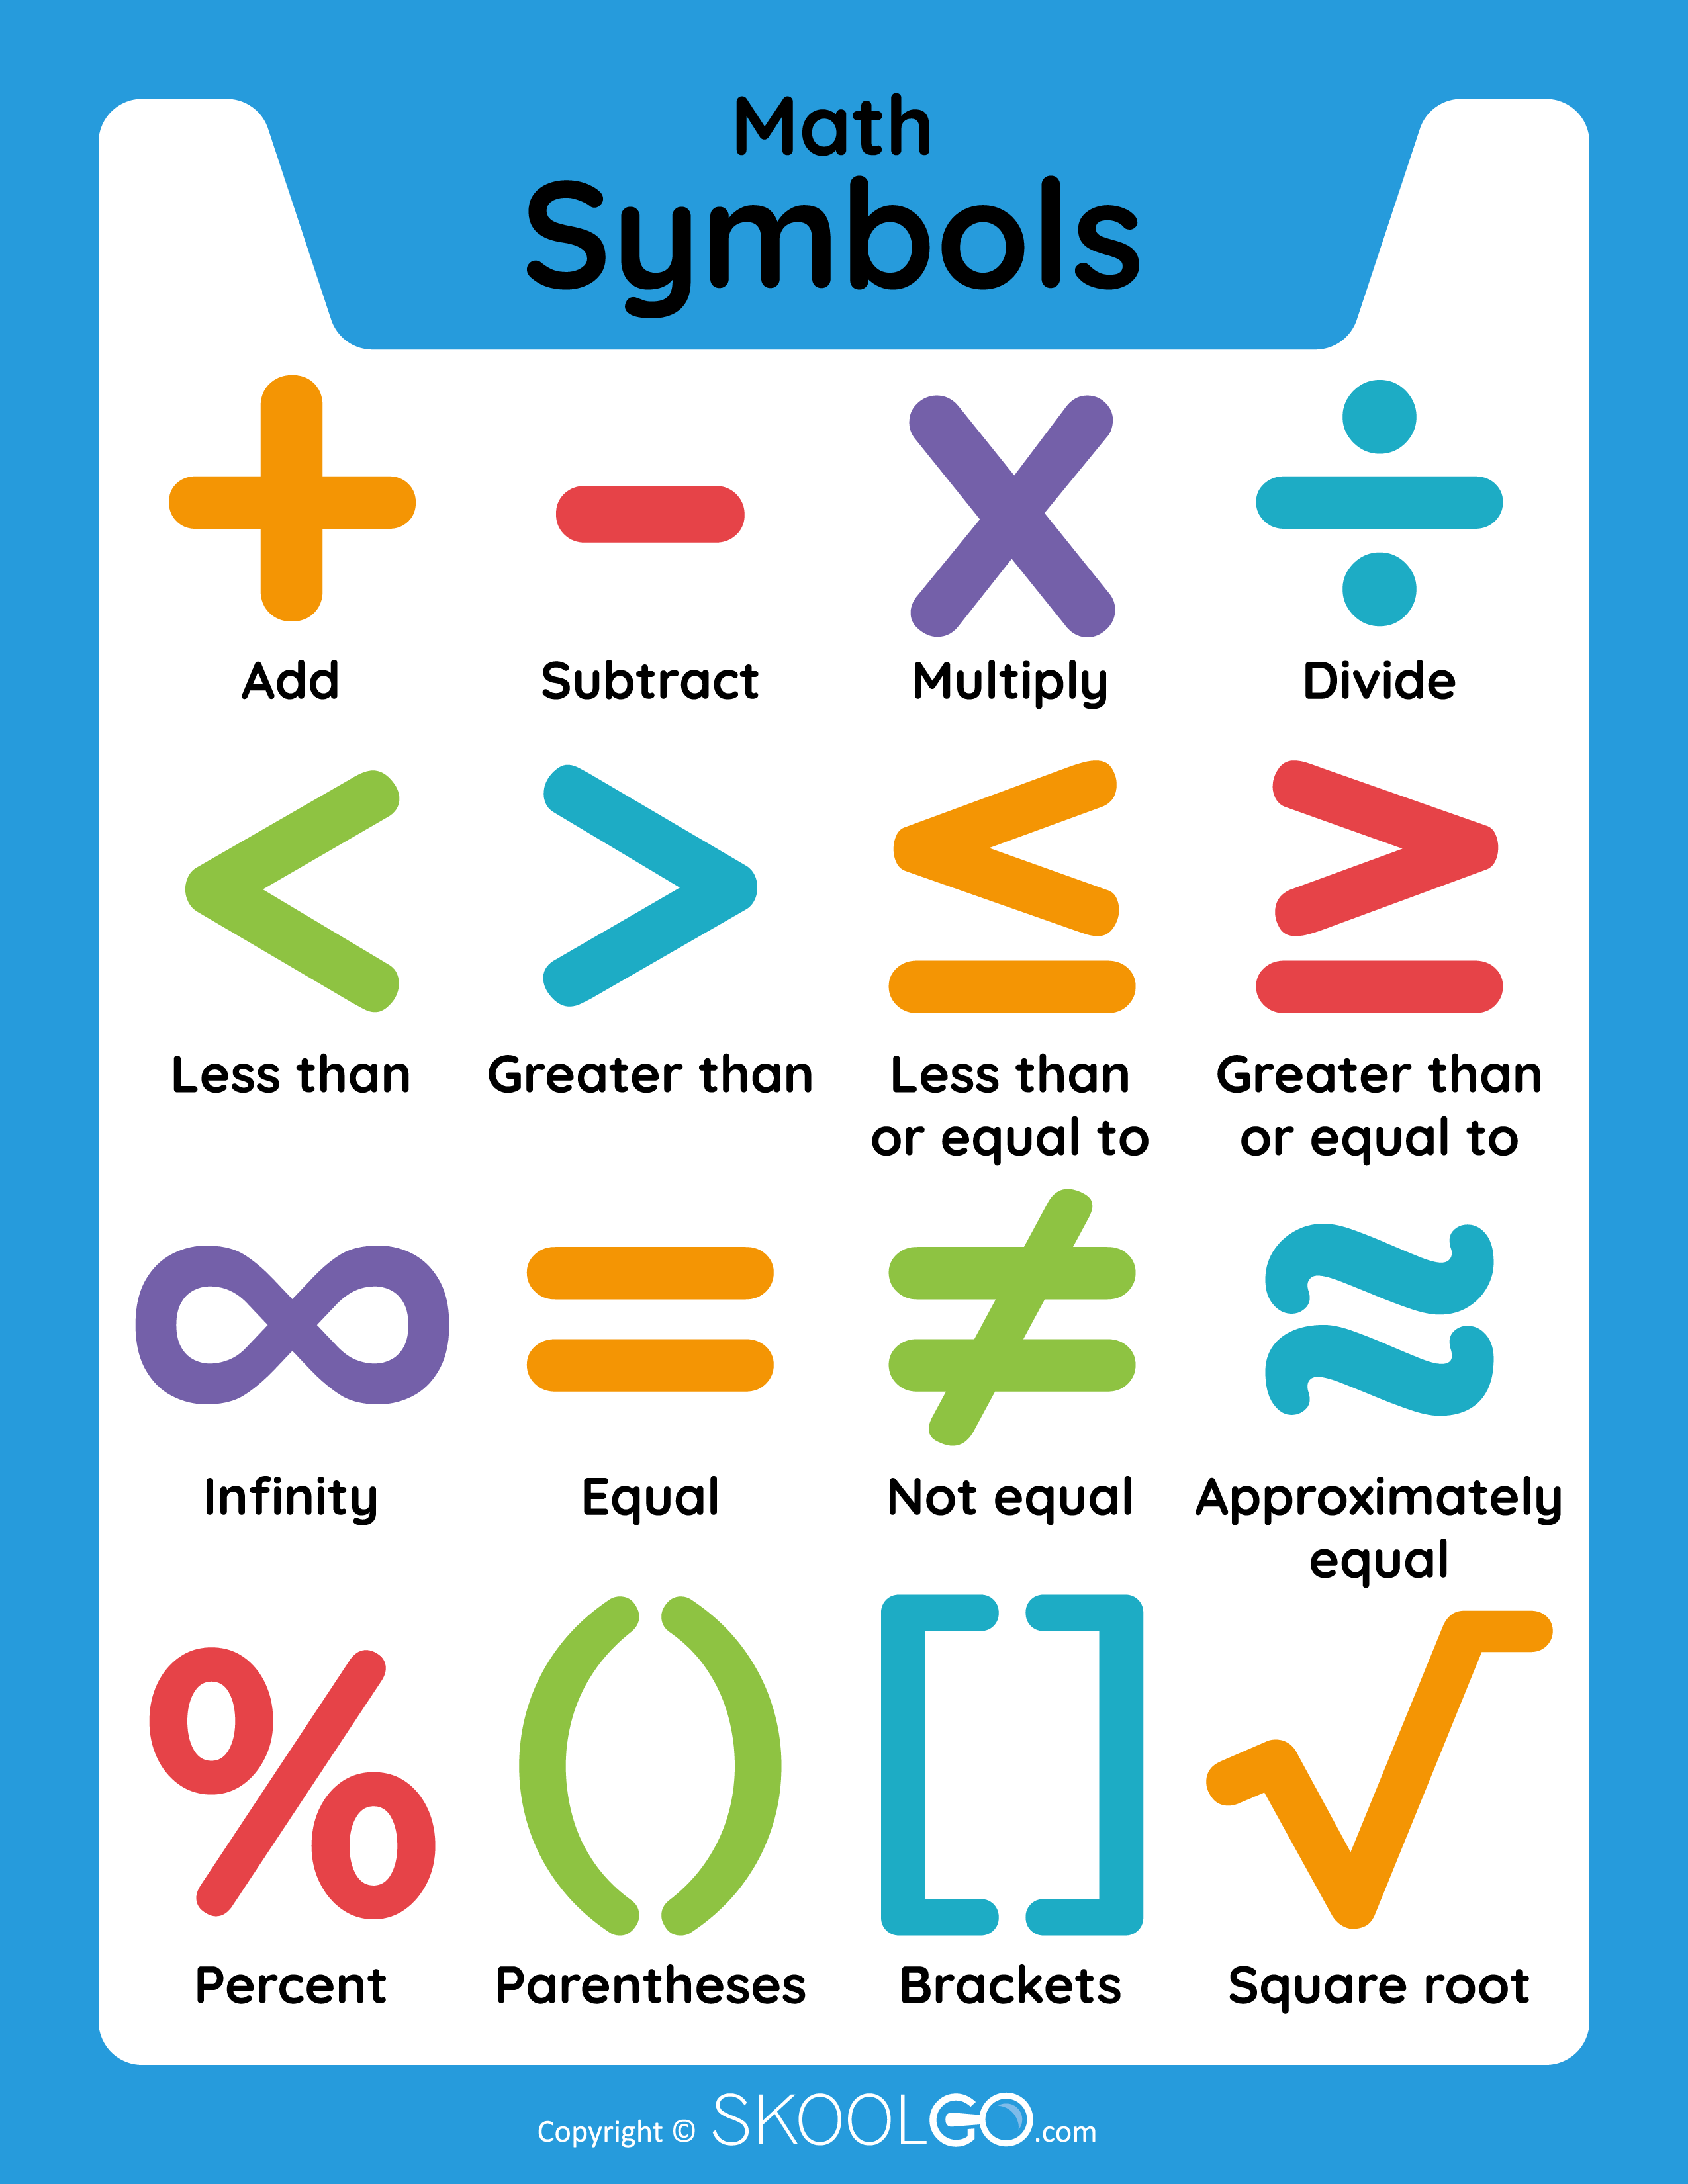 Math Symbols - Free Classroom Poster